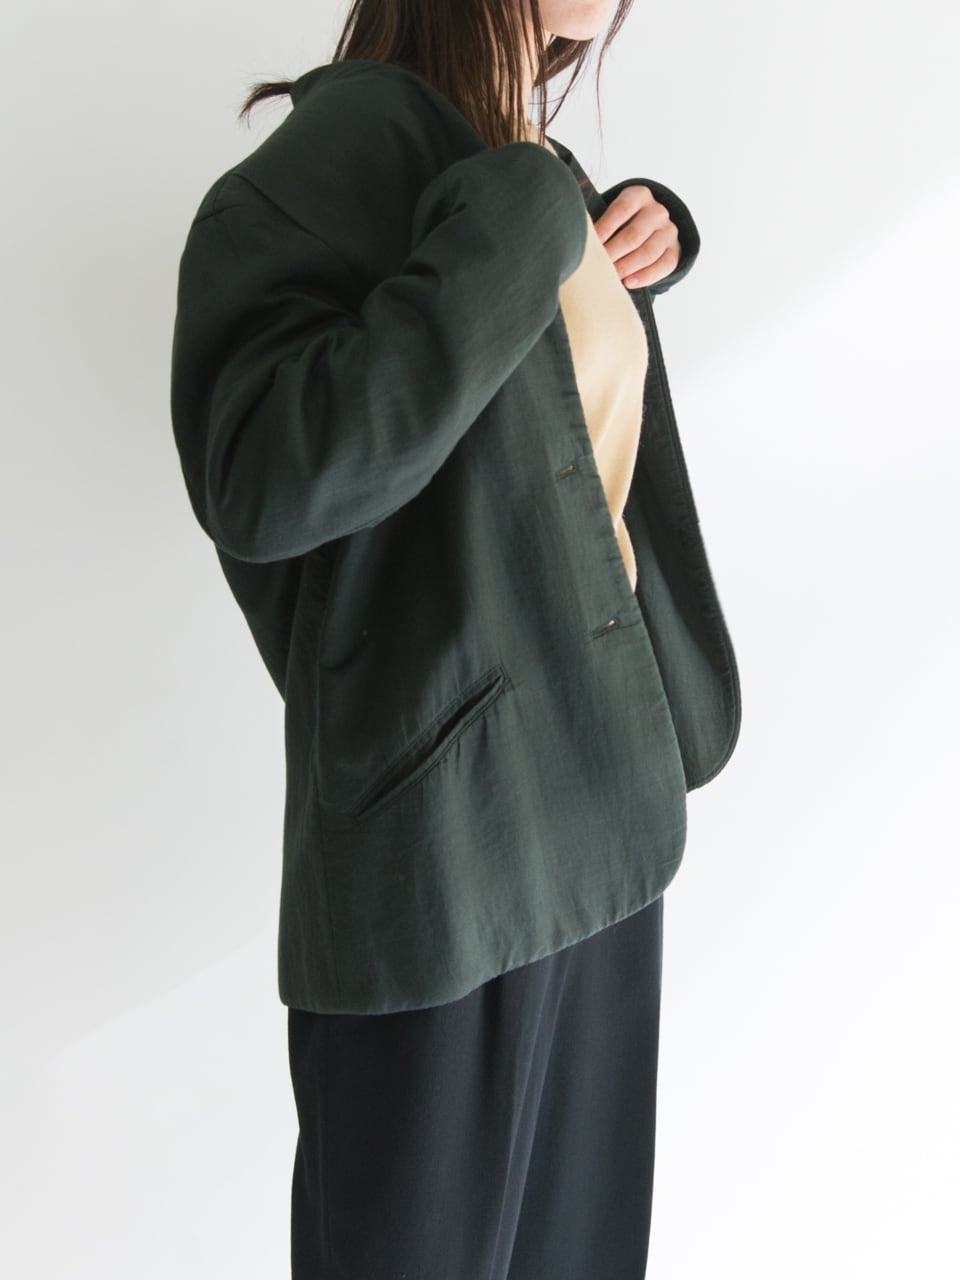 ISSEY MIYAKE】Made in Japan collarless jacket（イッセイミヤケ